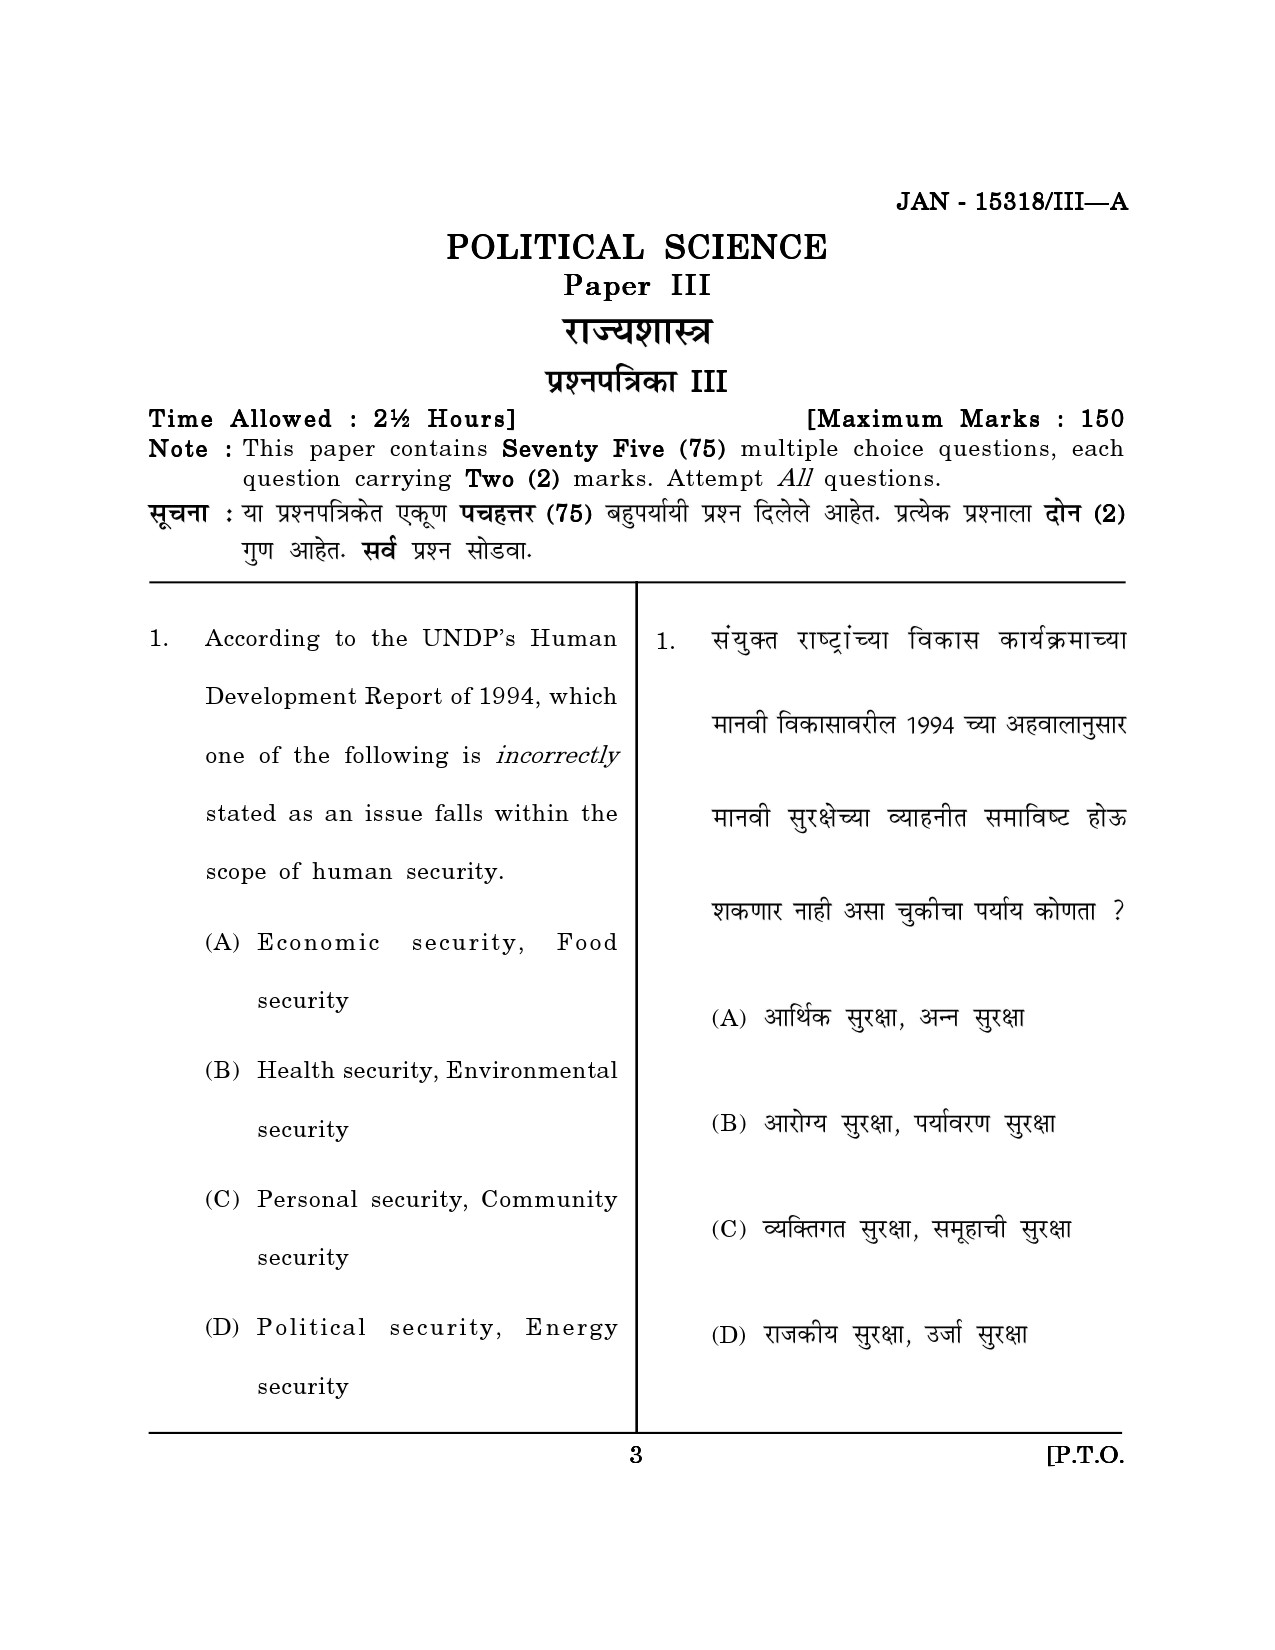 Maharashtra SET Political Science Question Paper III January 2018 2